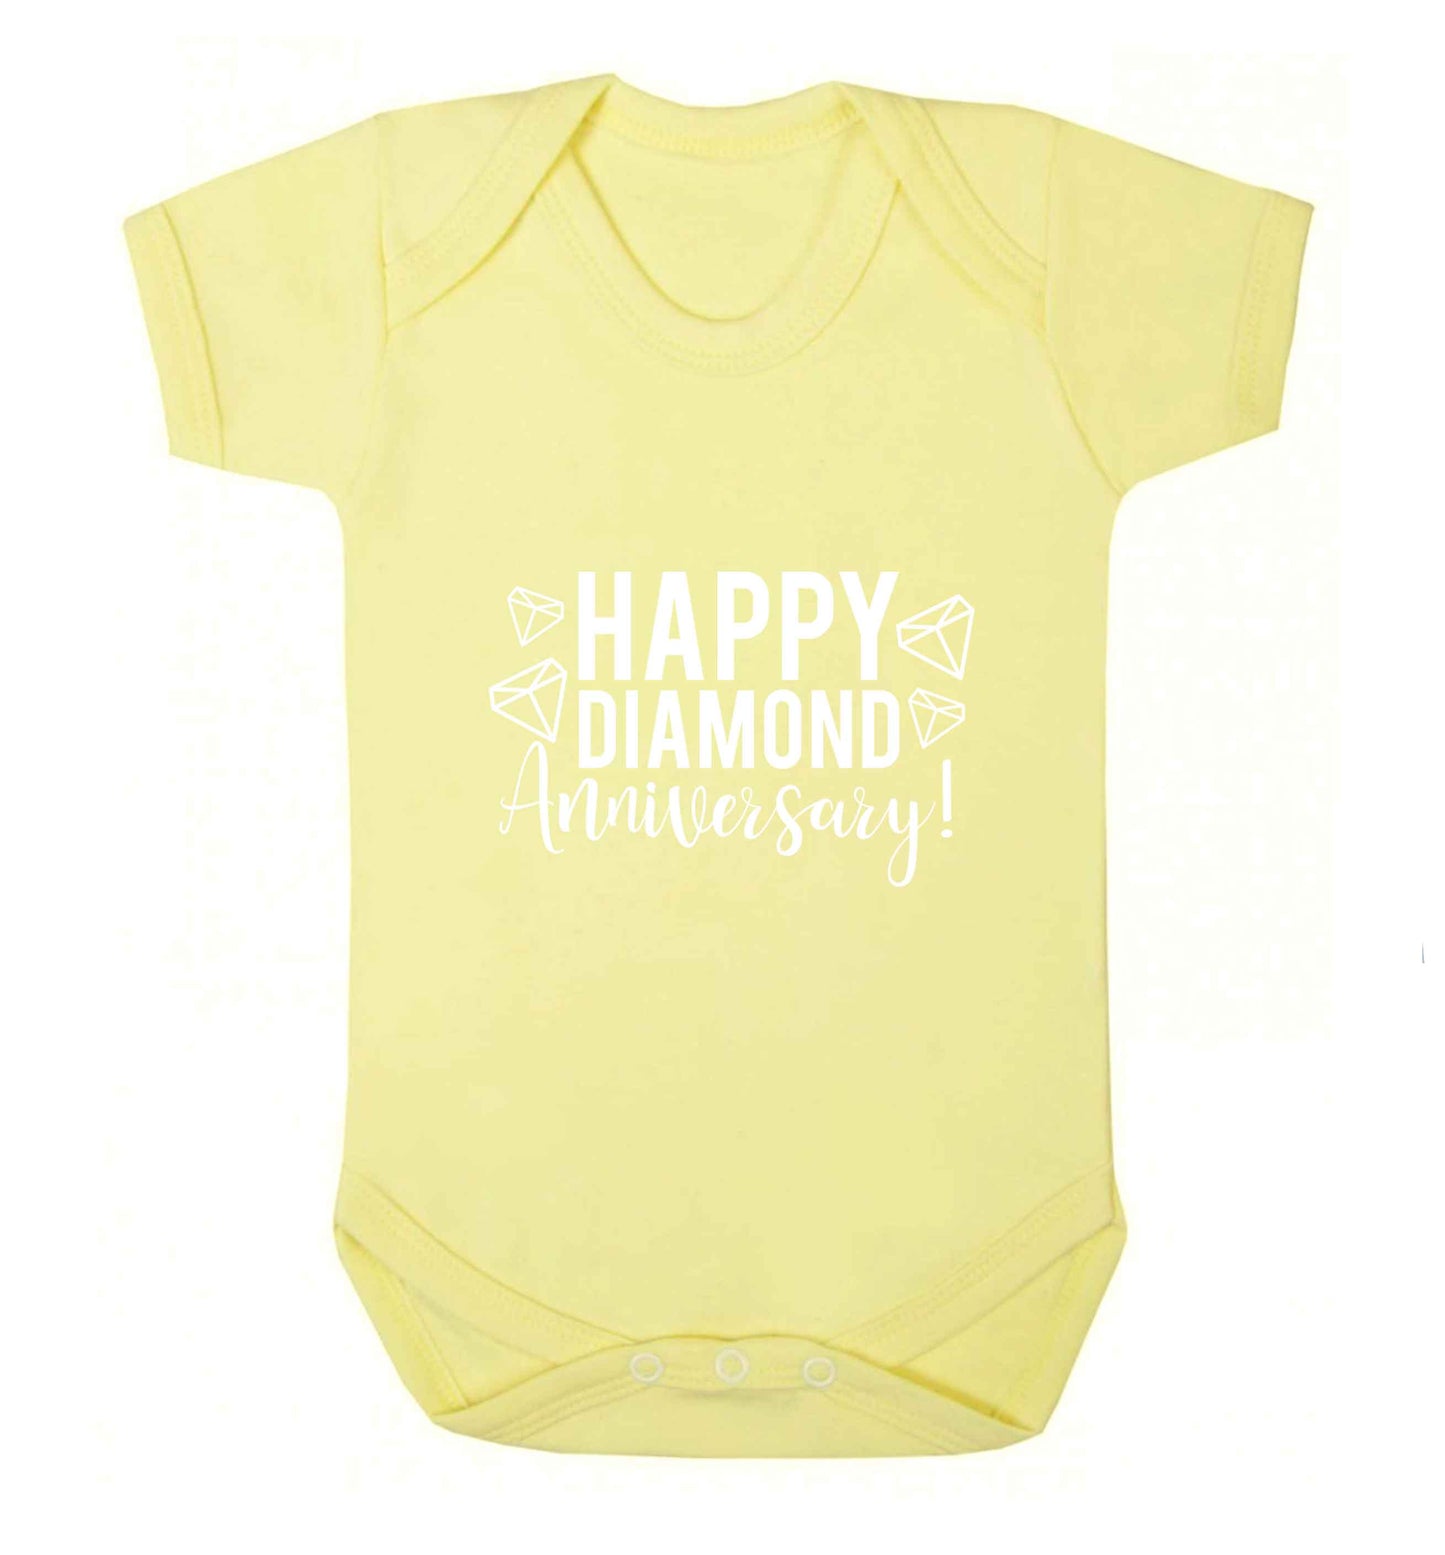 Happy diamond anniversary! baby vest pale yellow 18-24 months